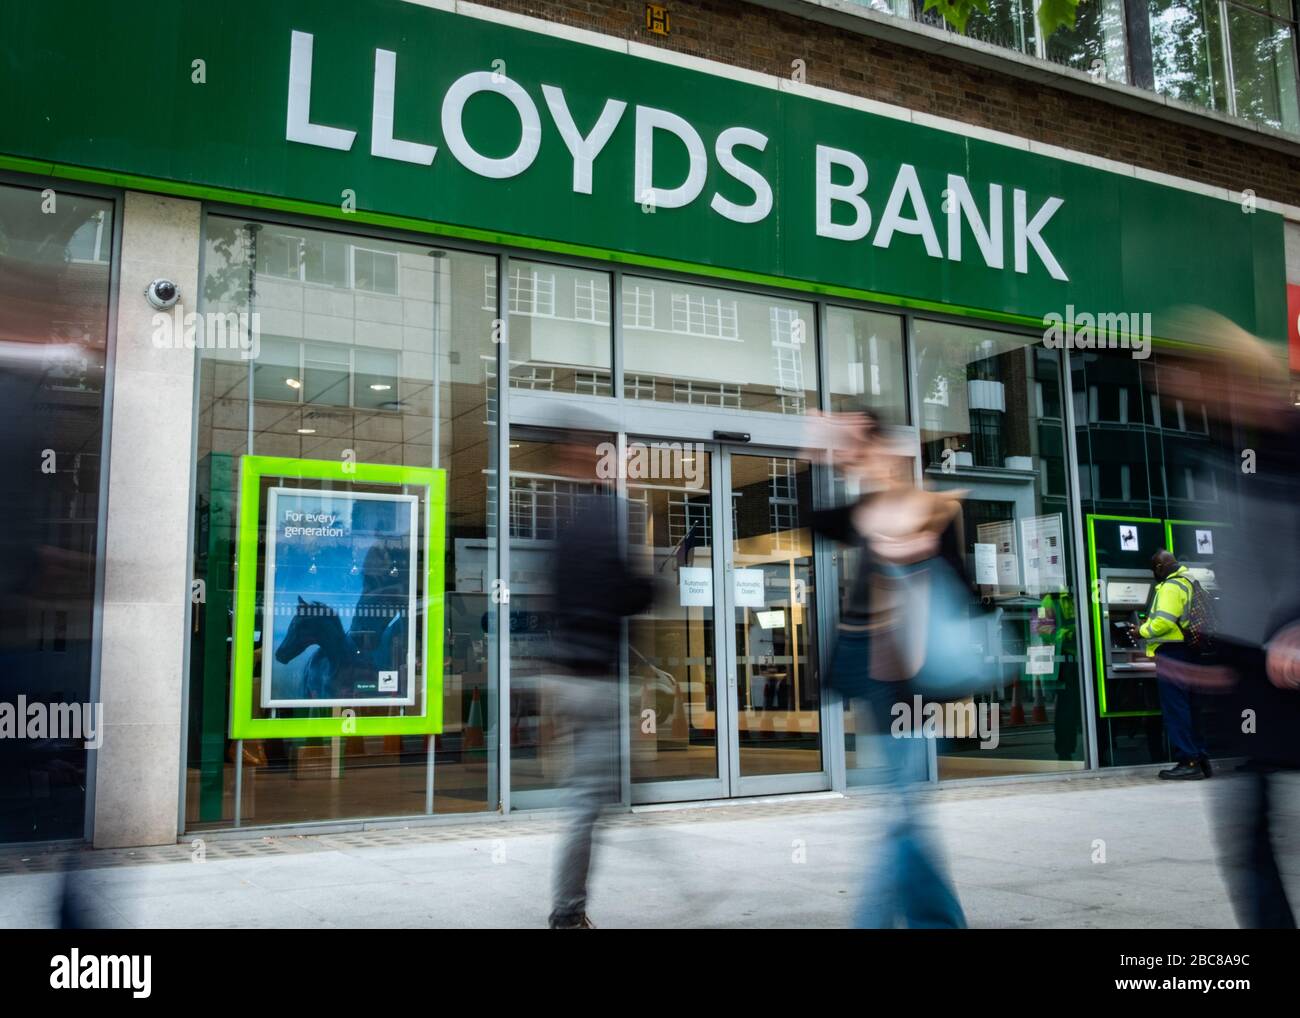 Lloyds- British high street bank branch, exterior logo / signage- London Stock Photo